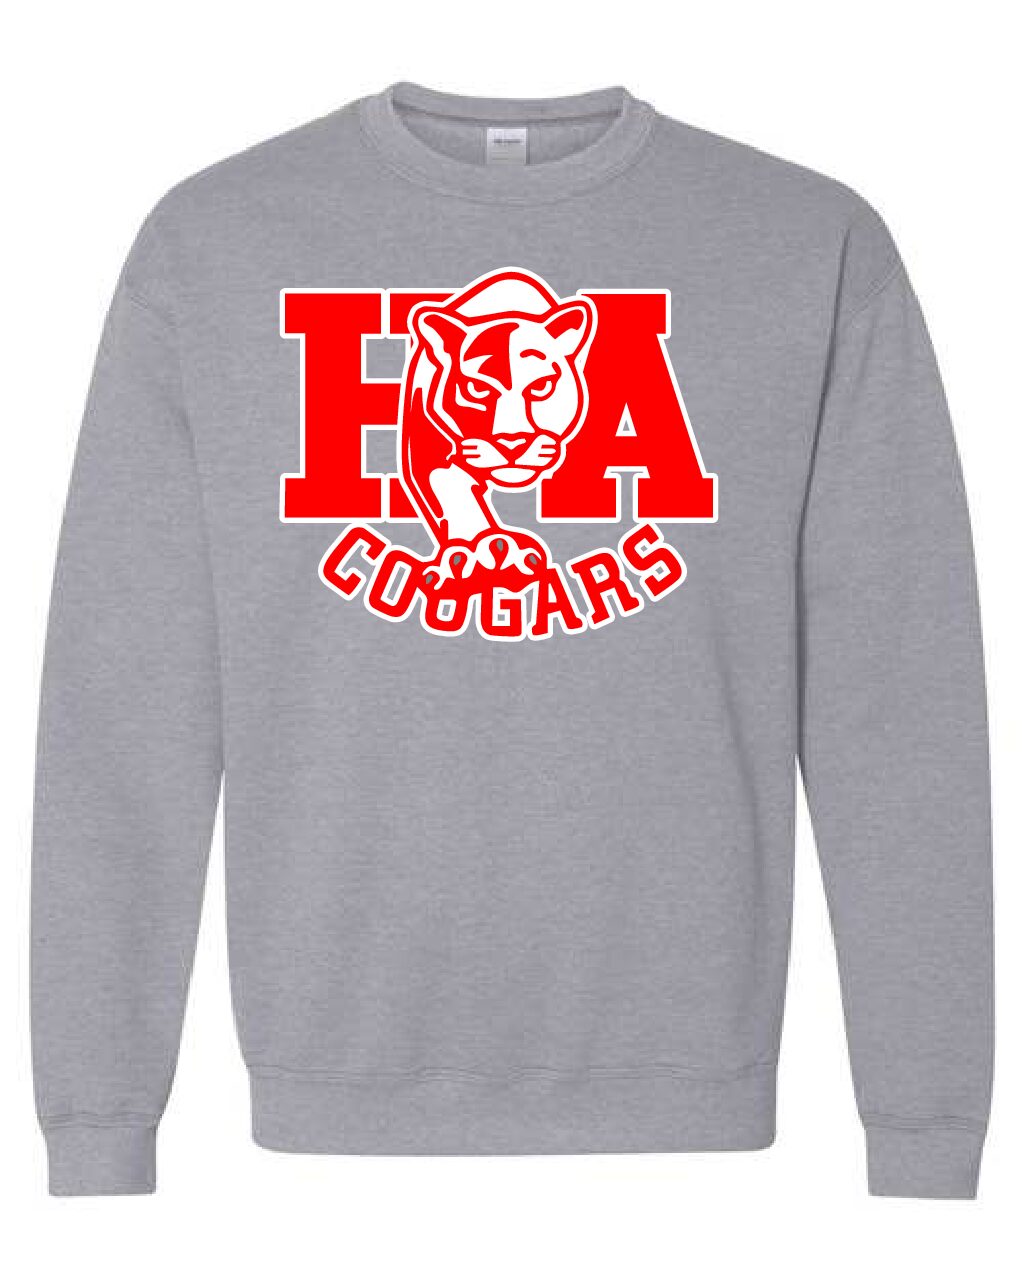 HA Cougars Crewneck Sweatshirt(Adult and Youth Sizes)